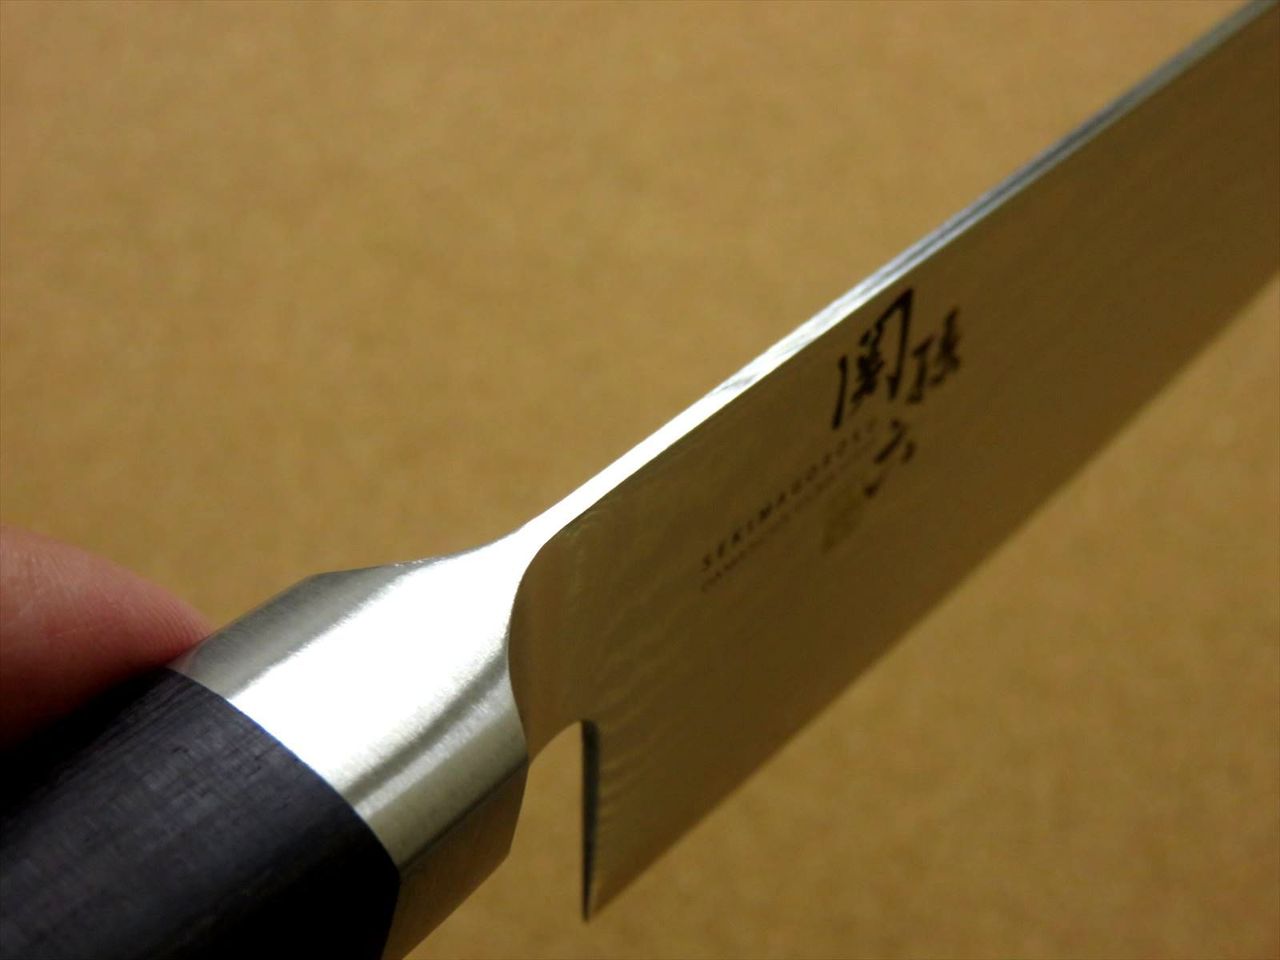 Japanese KAI MAGOROKU Kitchen Nakiri Knife 165mm 6 1/2 inch Damascus steel JAPAN